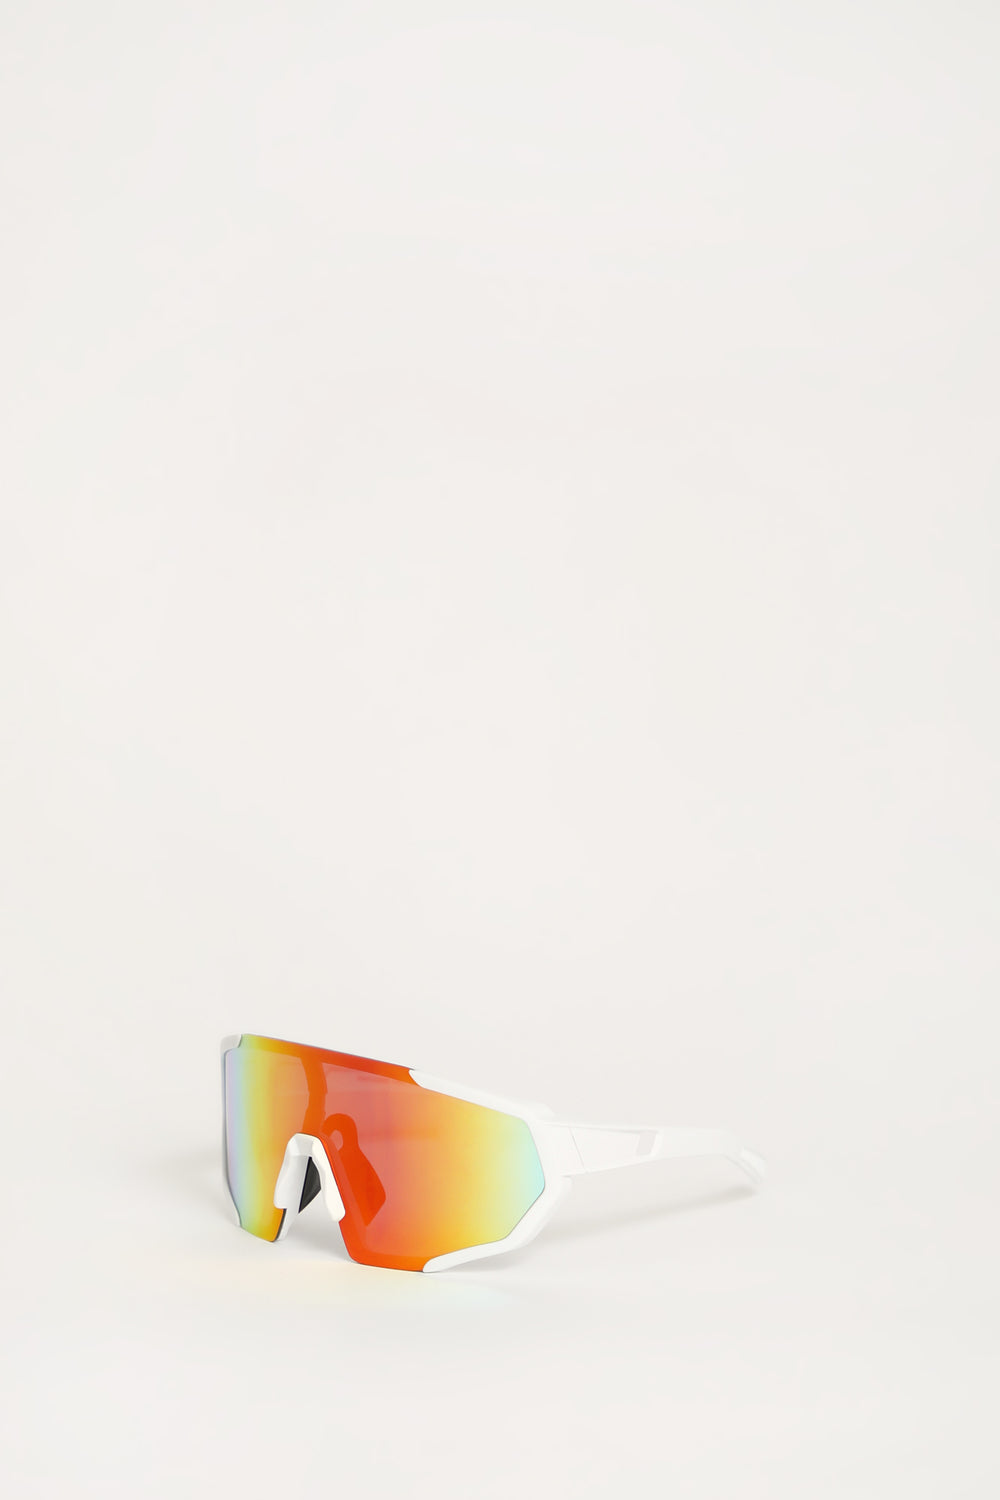 West49 Rainbow Shield Sunglasses West49 Rainbow Shield Sunglasses